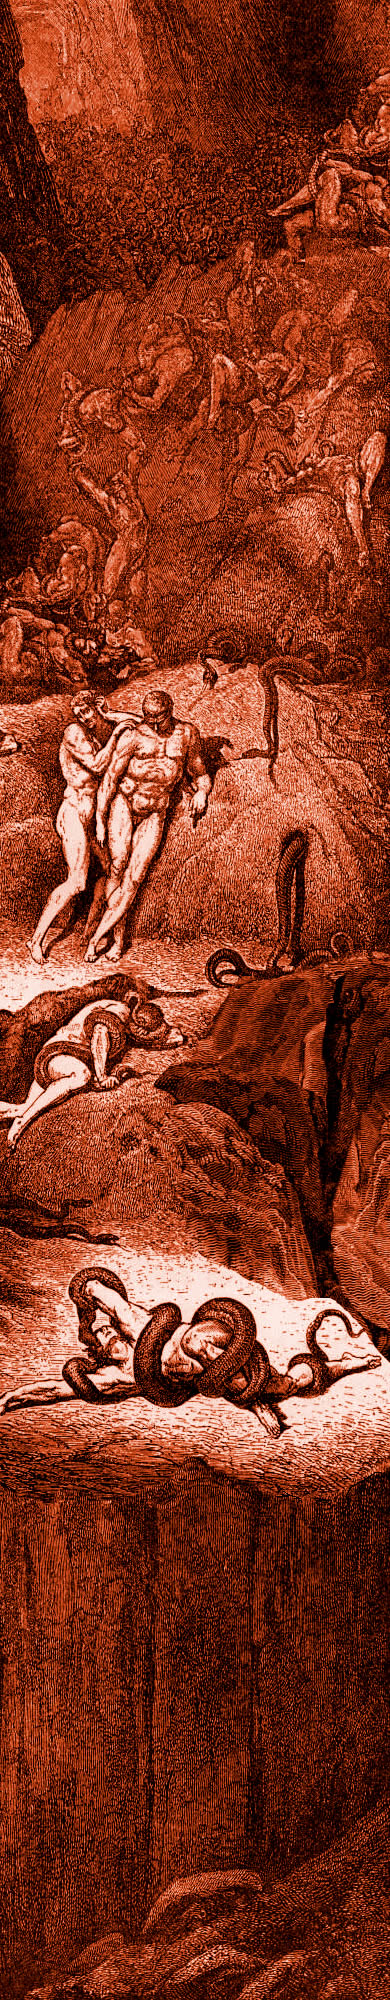 Illustrations by Gustave Doré (1832-1883)